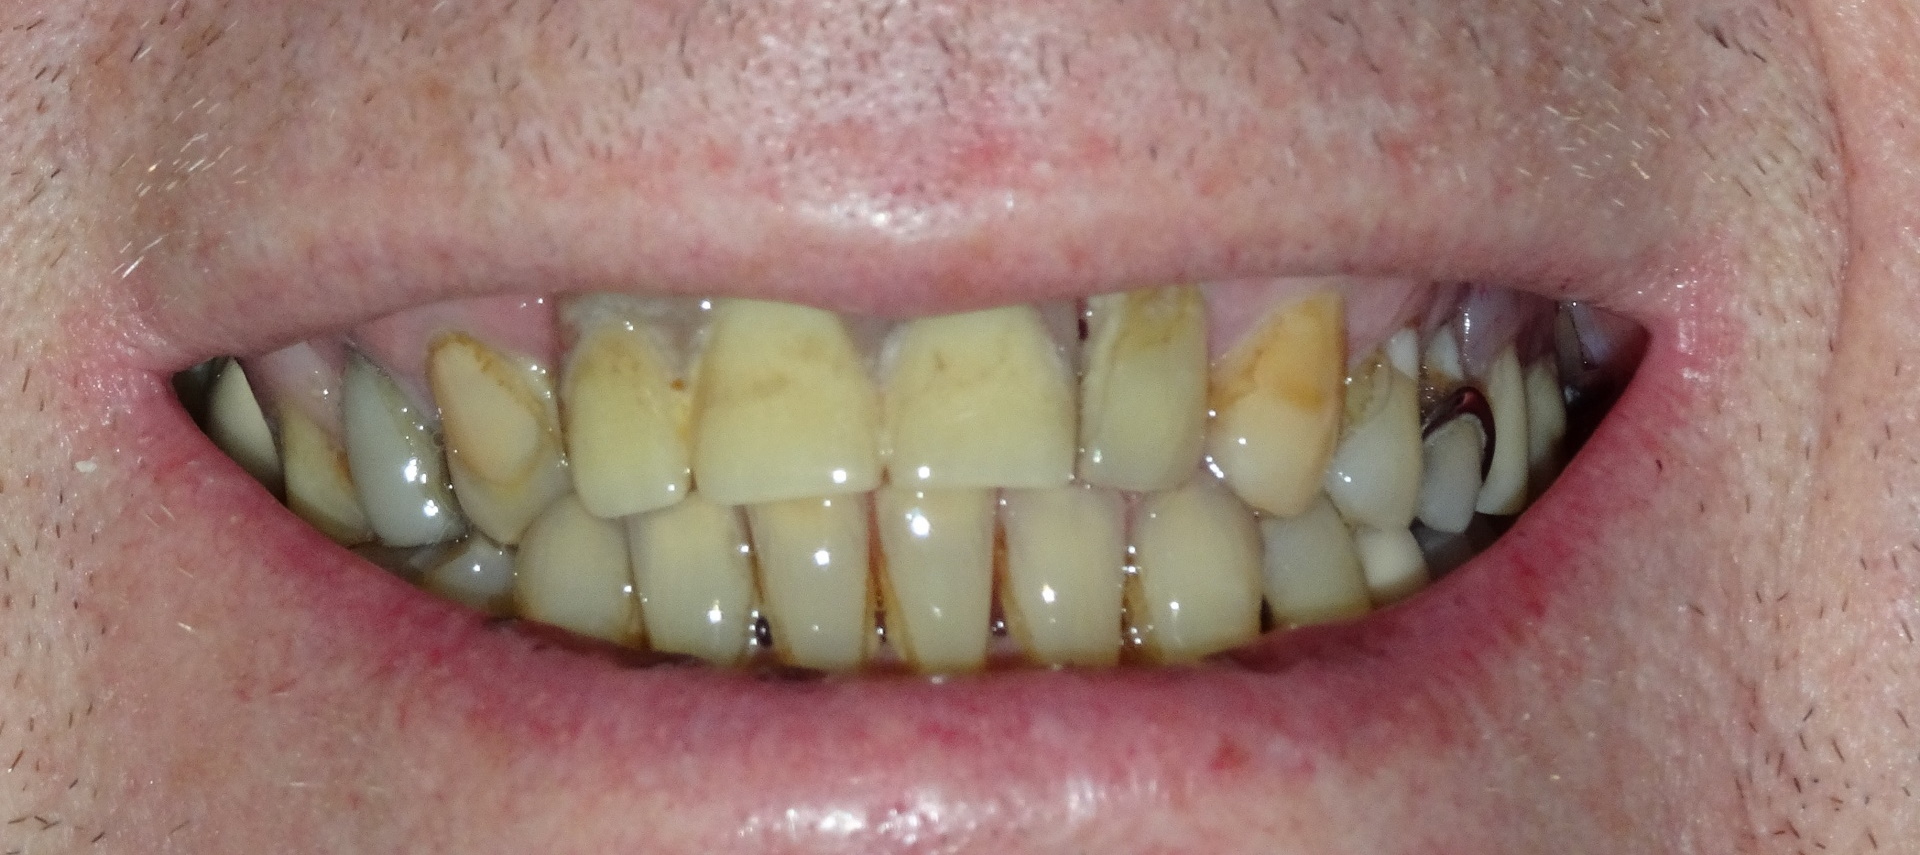 yellowed teeth need professional teeth whitening